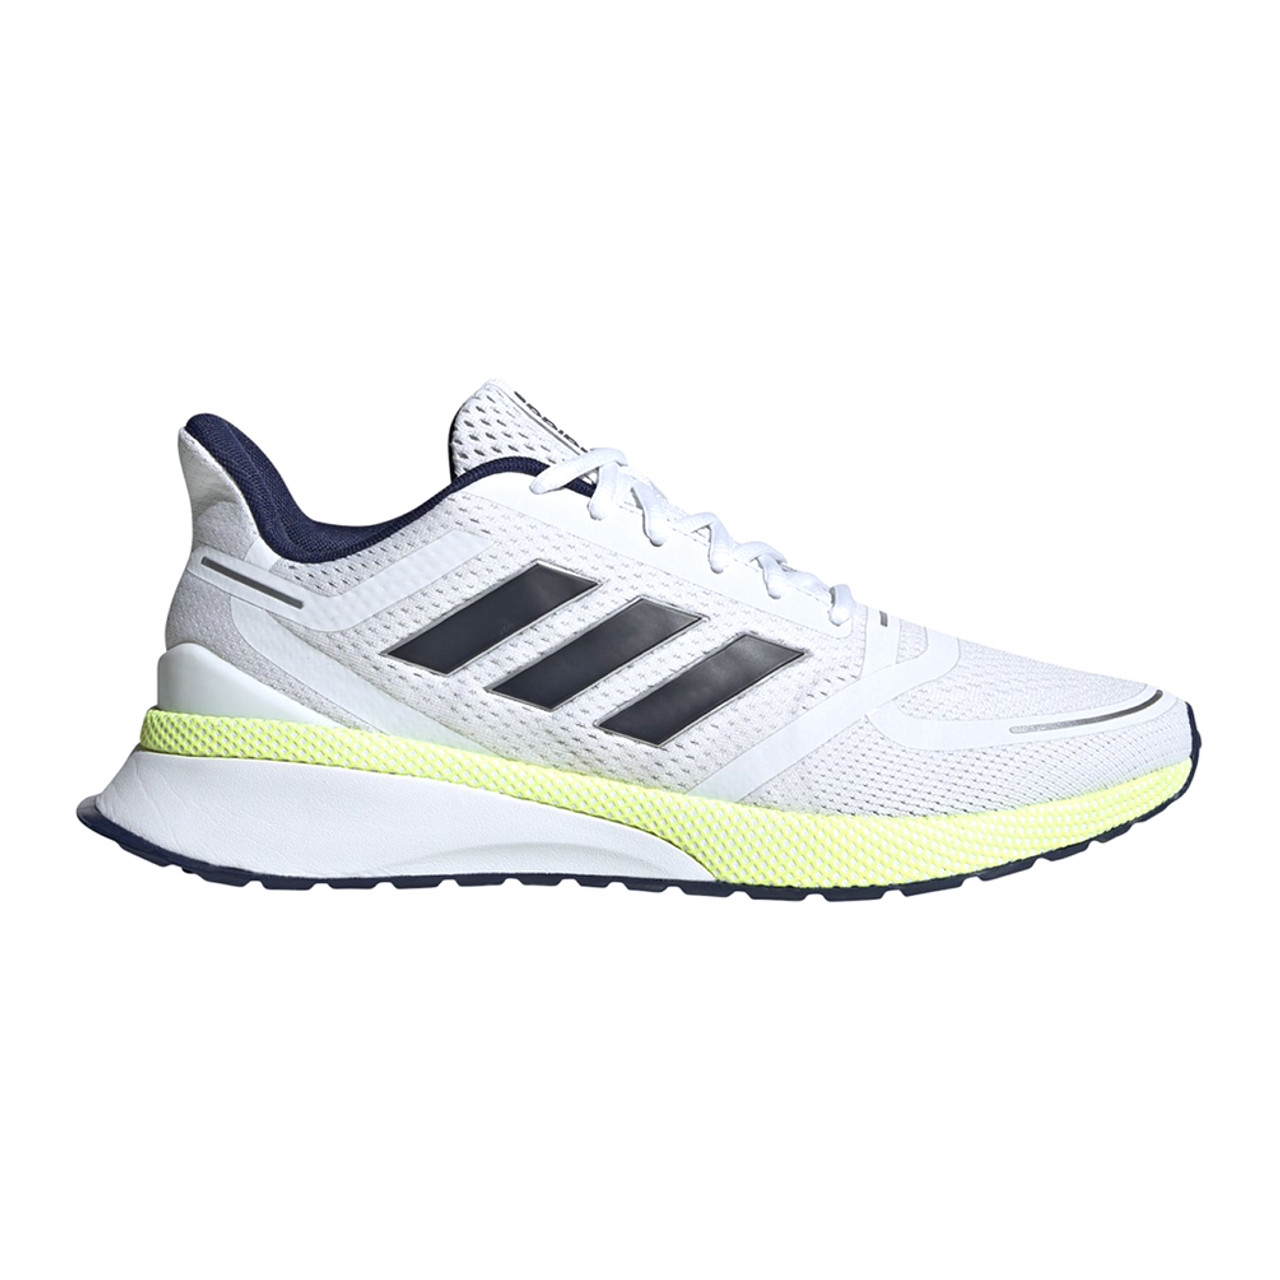 adidas men's nova running shoe